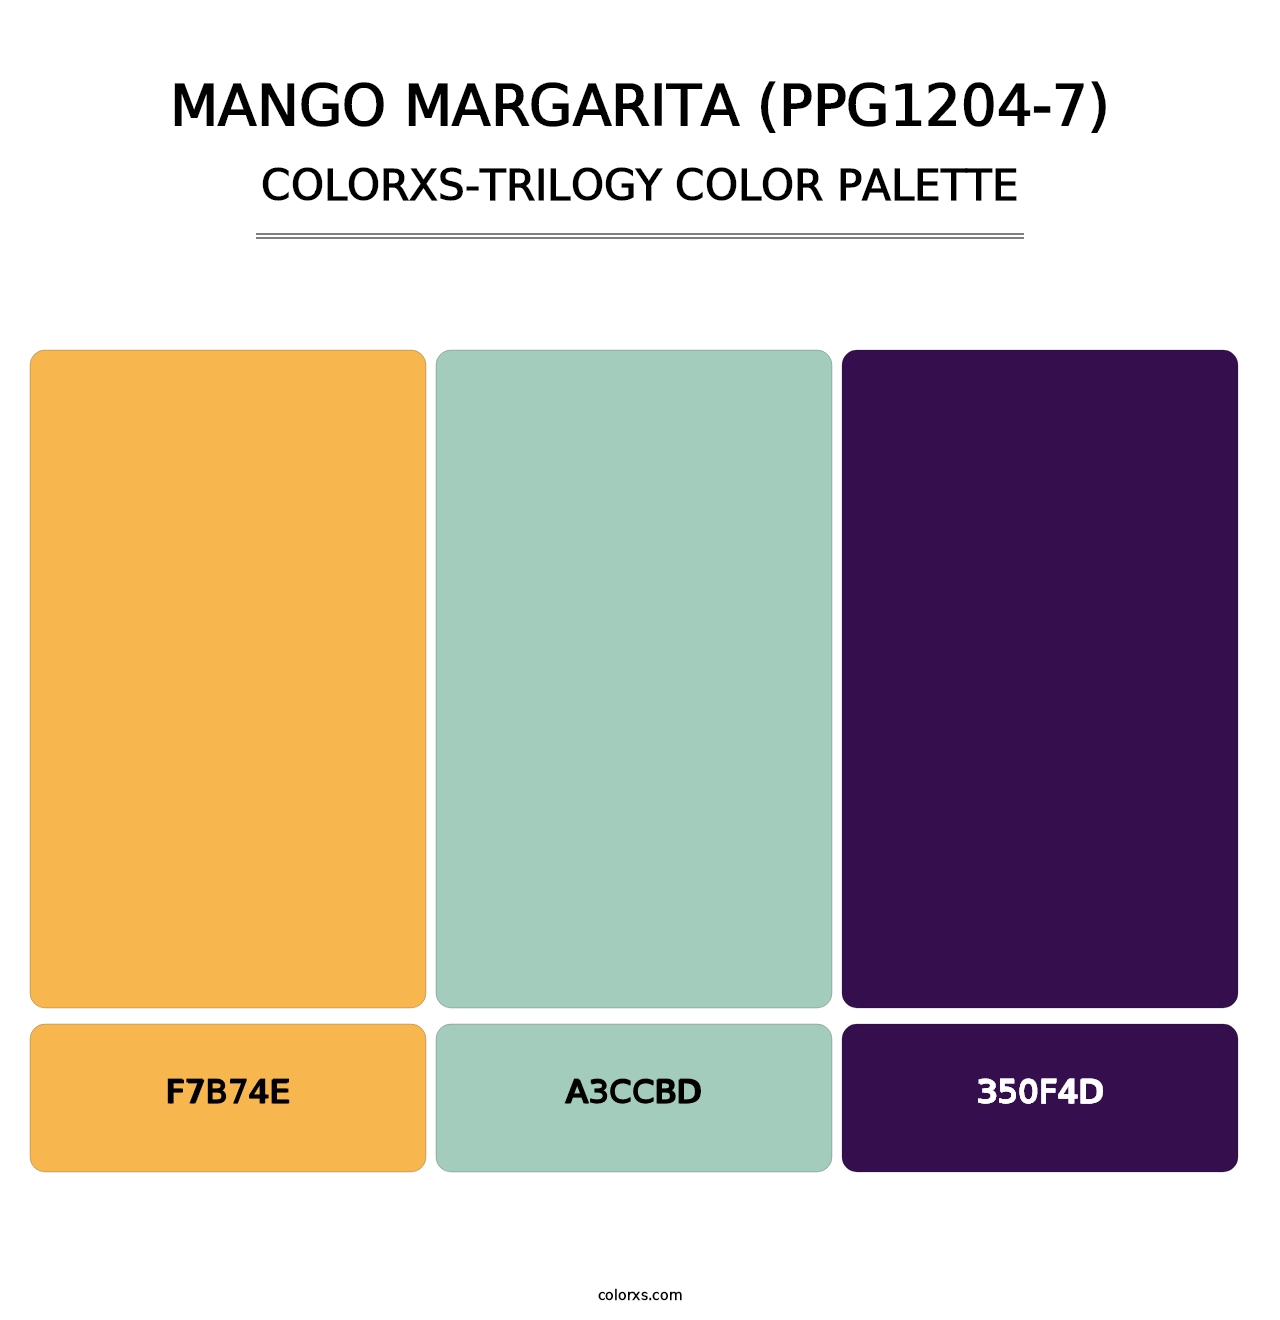 Mango Margarita (PPG1204-7) - Colorxs Trilogy Palette